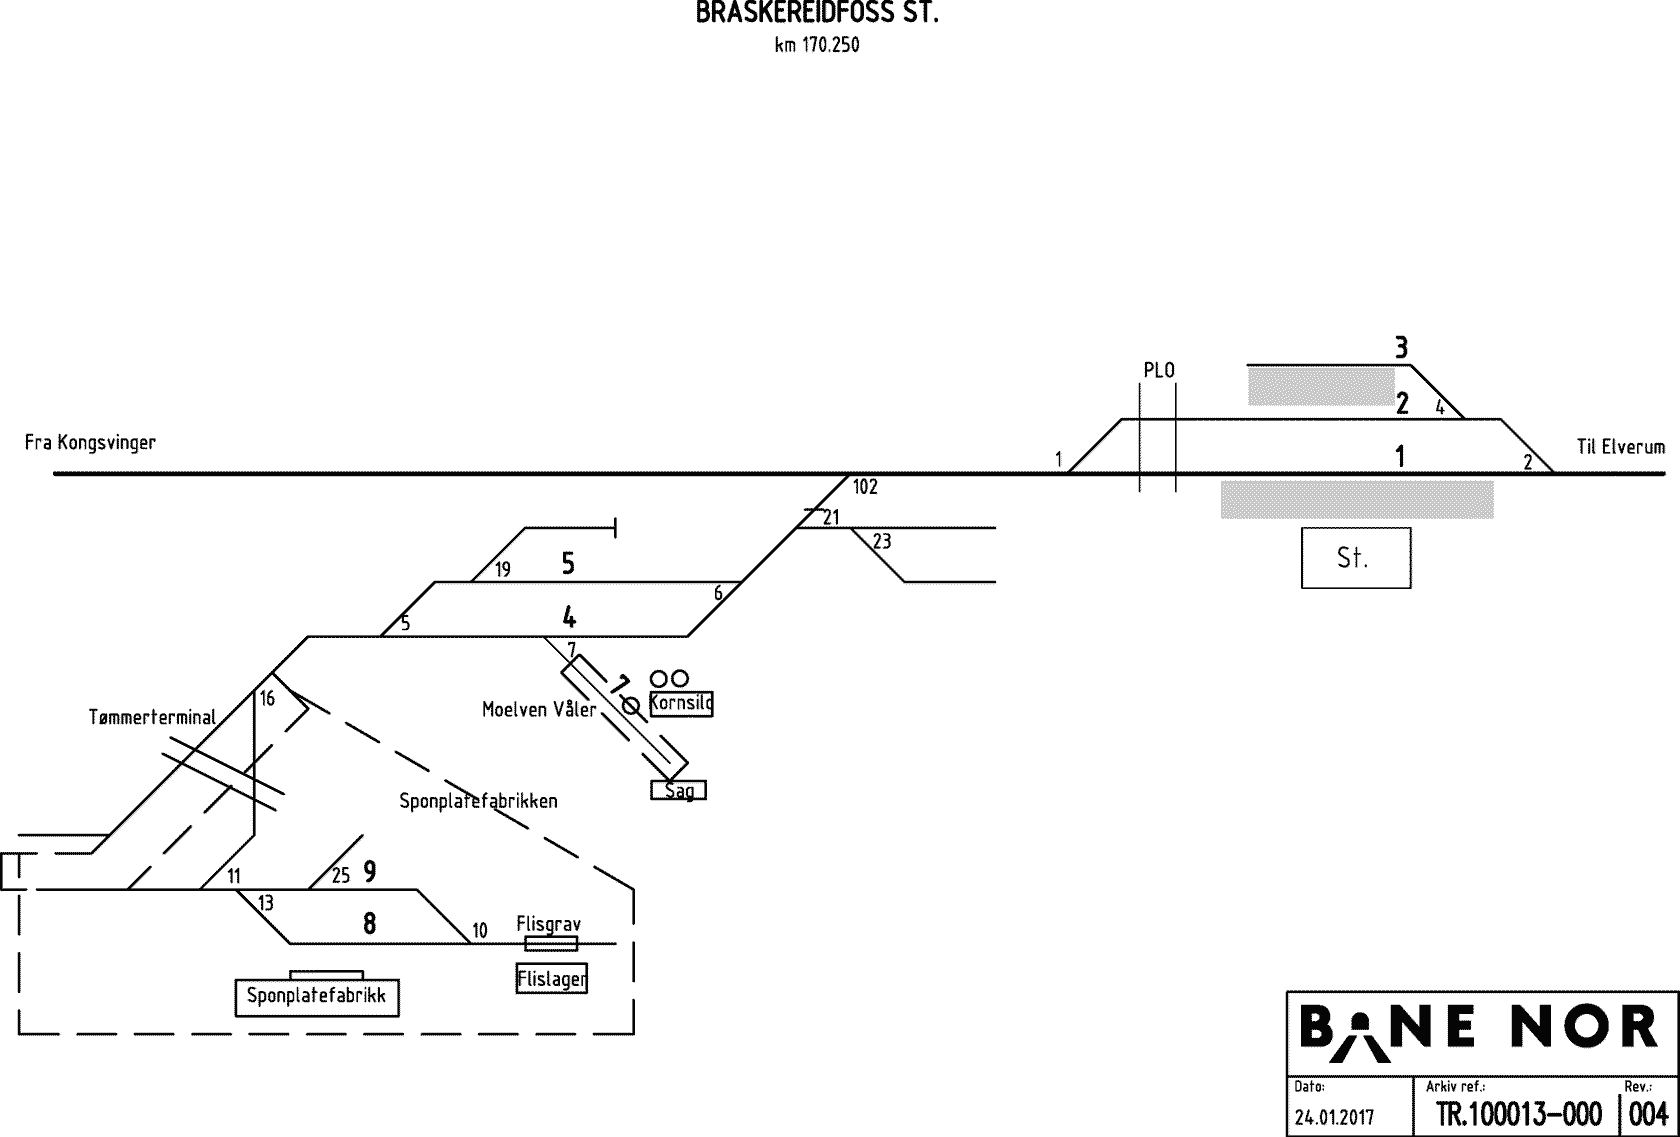 Track plan Braskereidfoss station